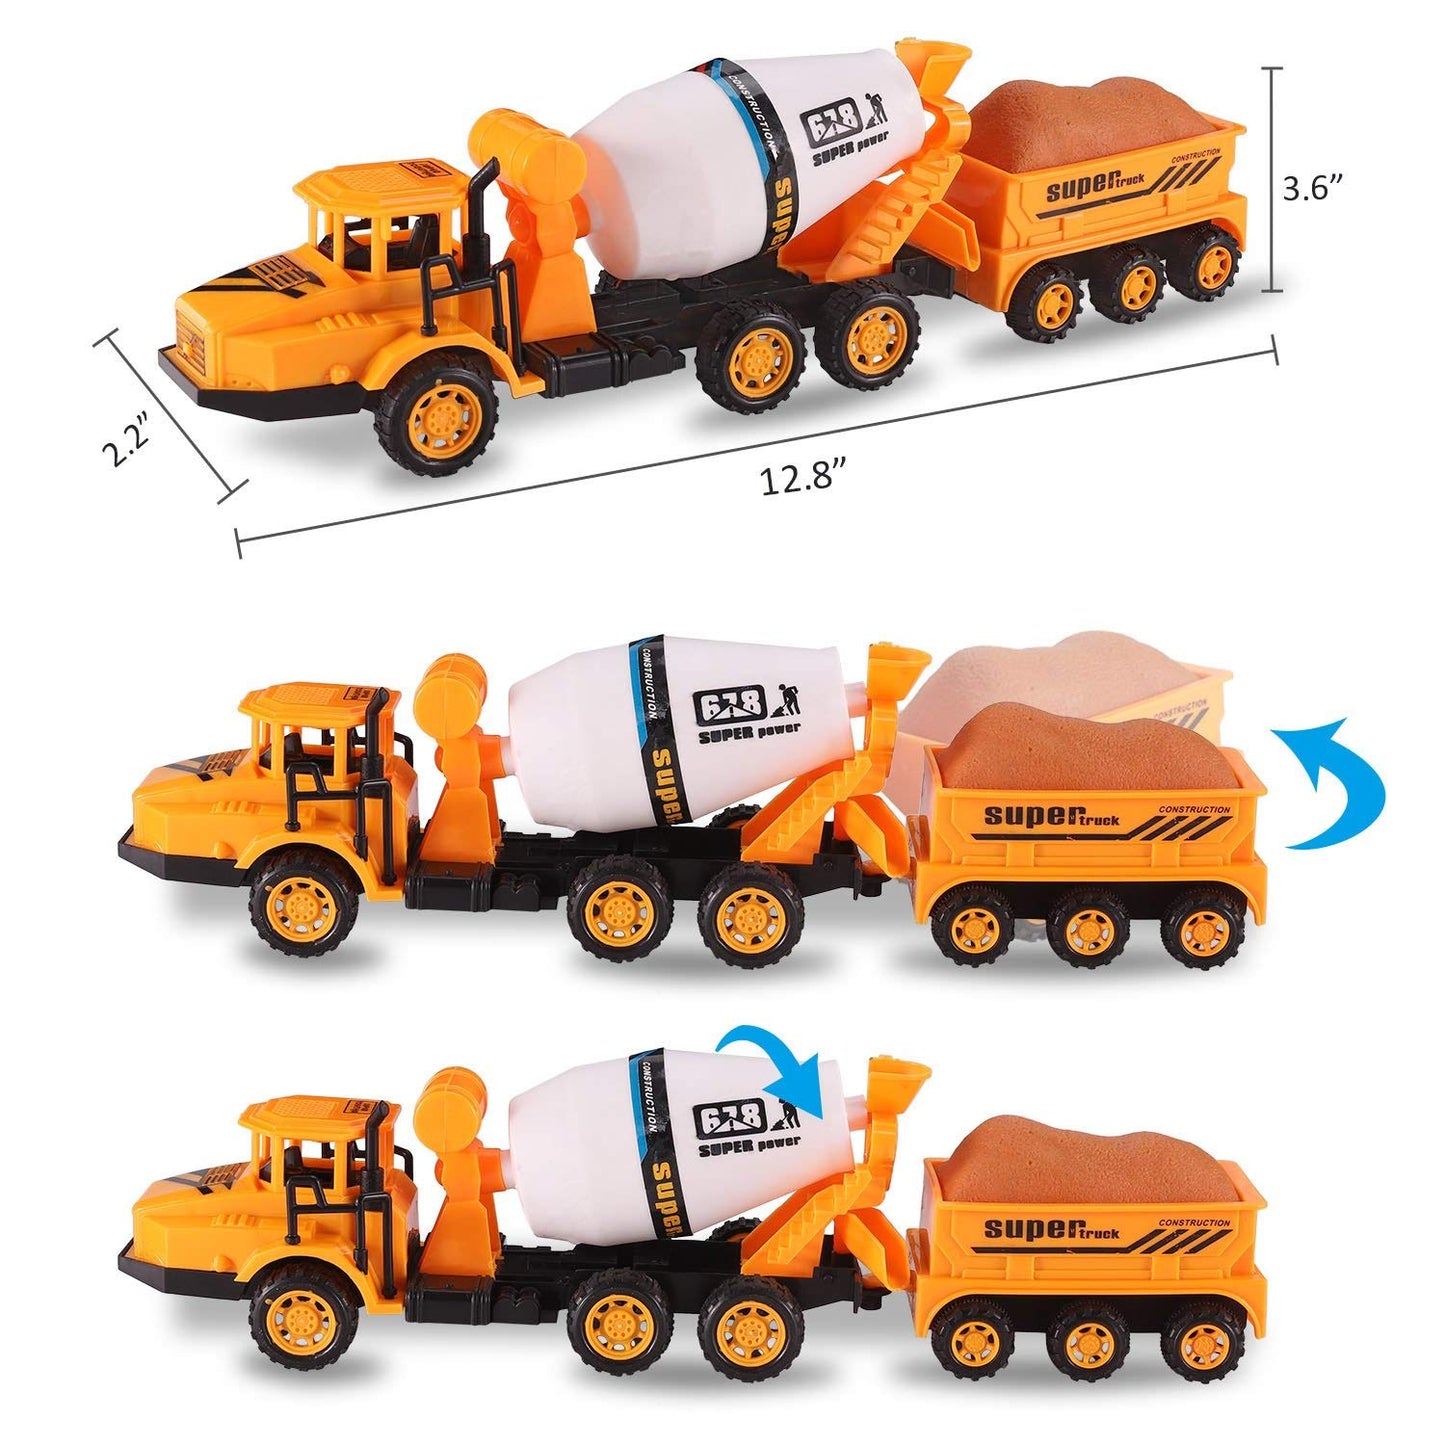 Set of 3 Deluxe Construction Toy Vehicles Playset - Dump Truck, Cement Truck, Excavator